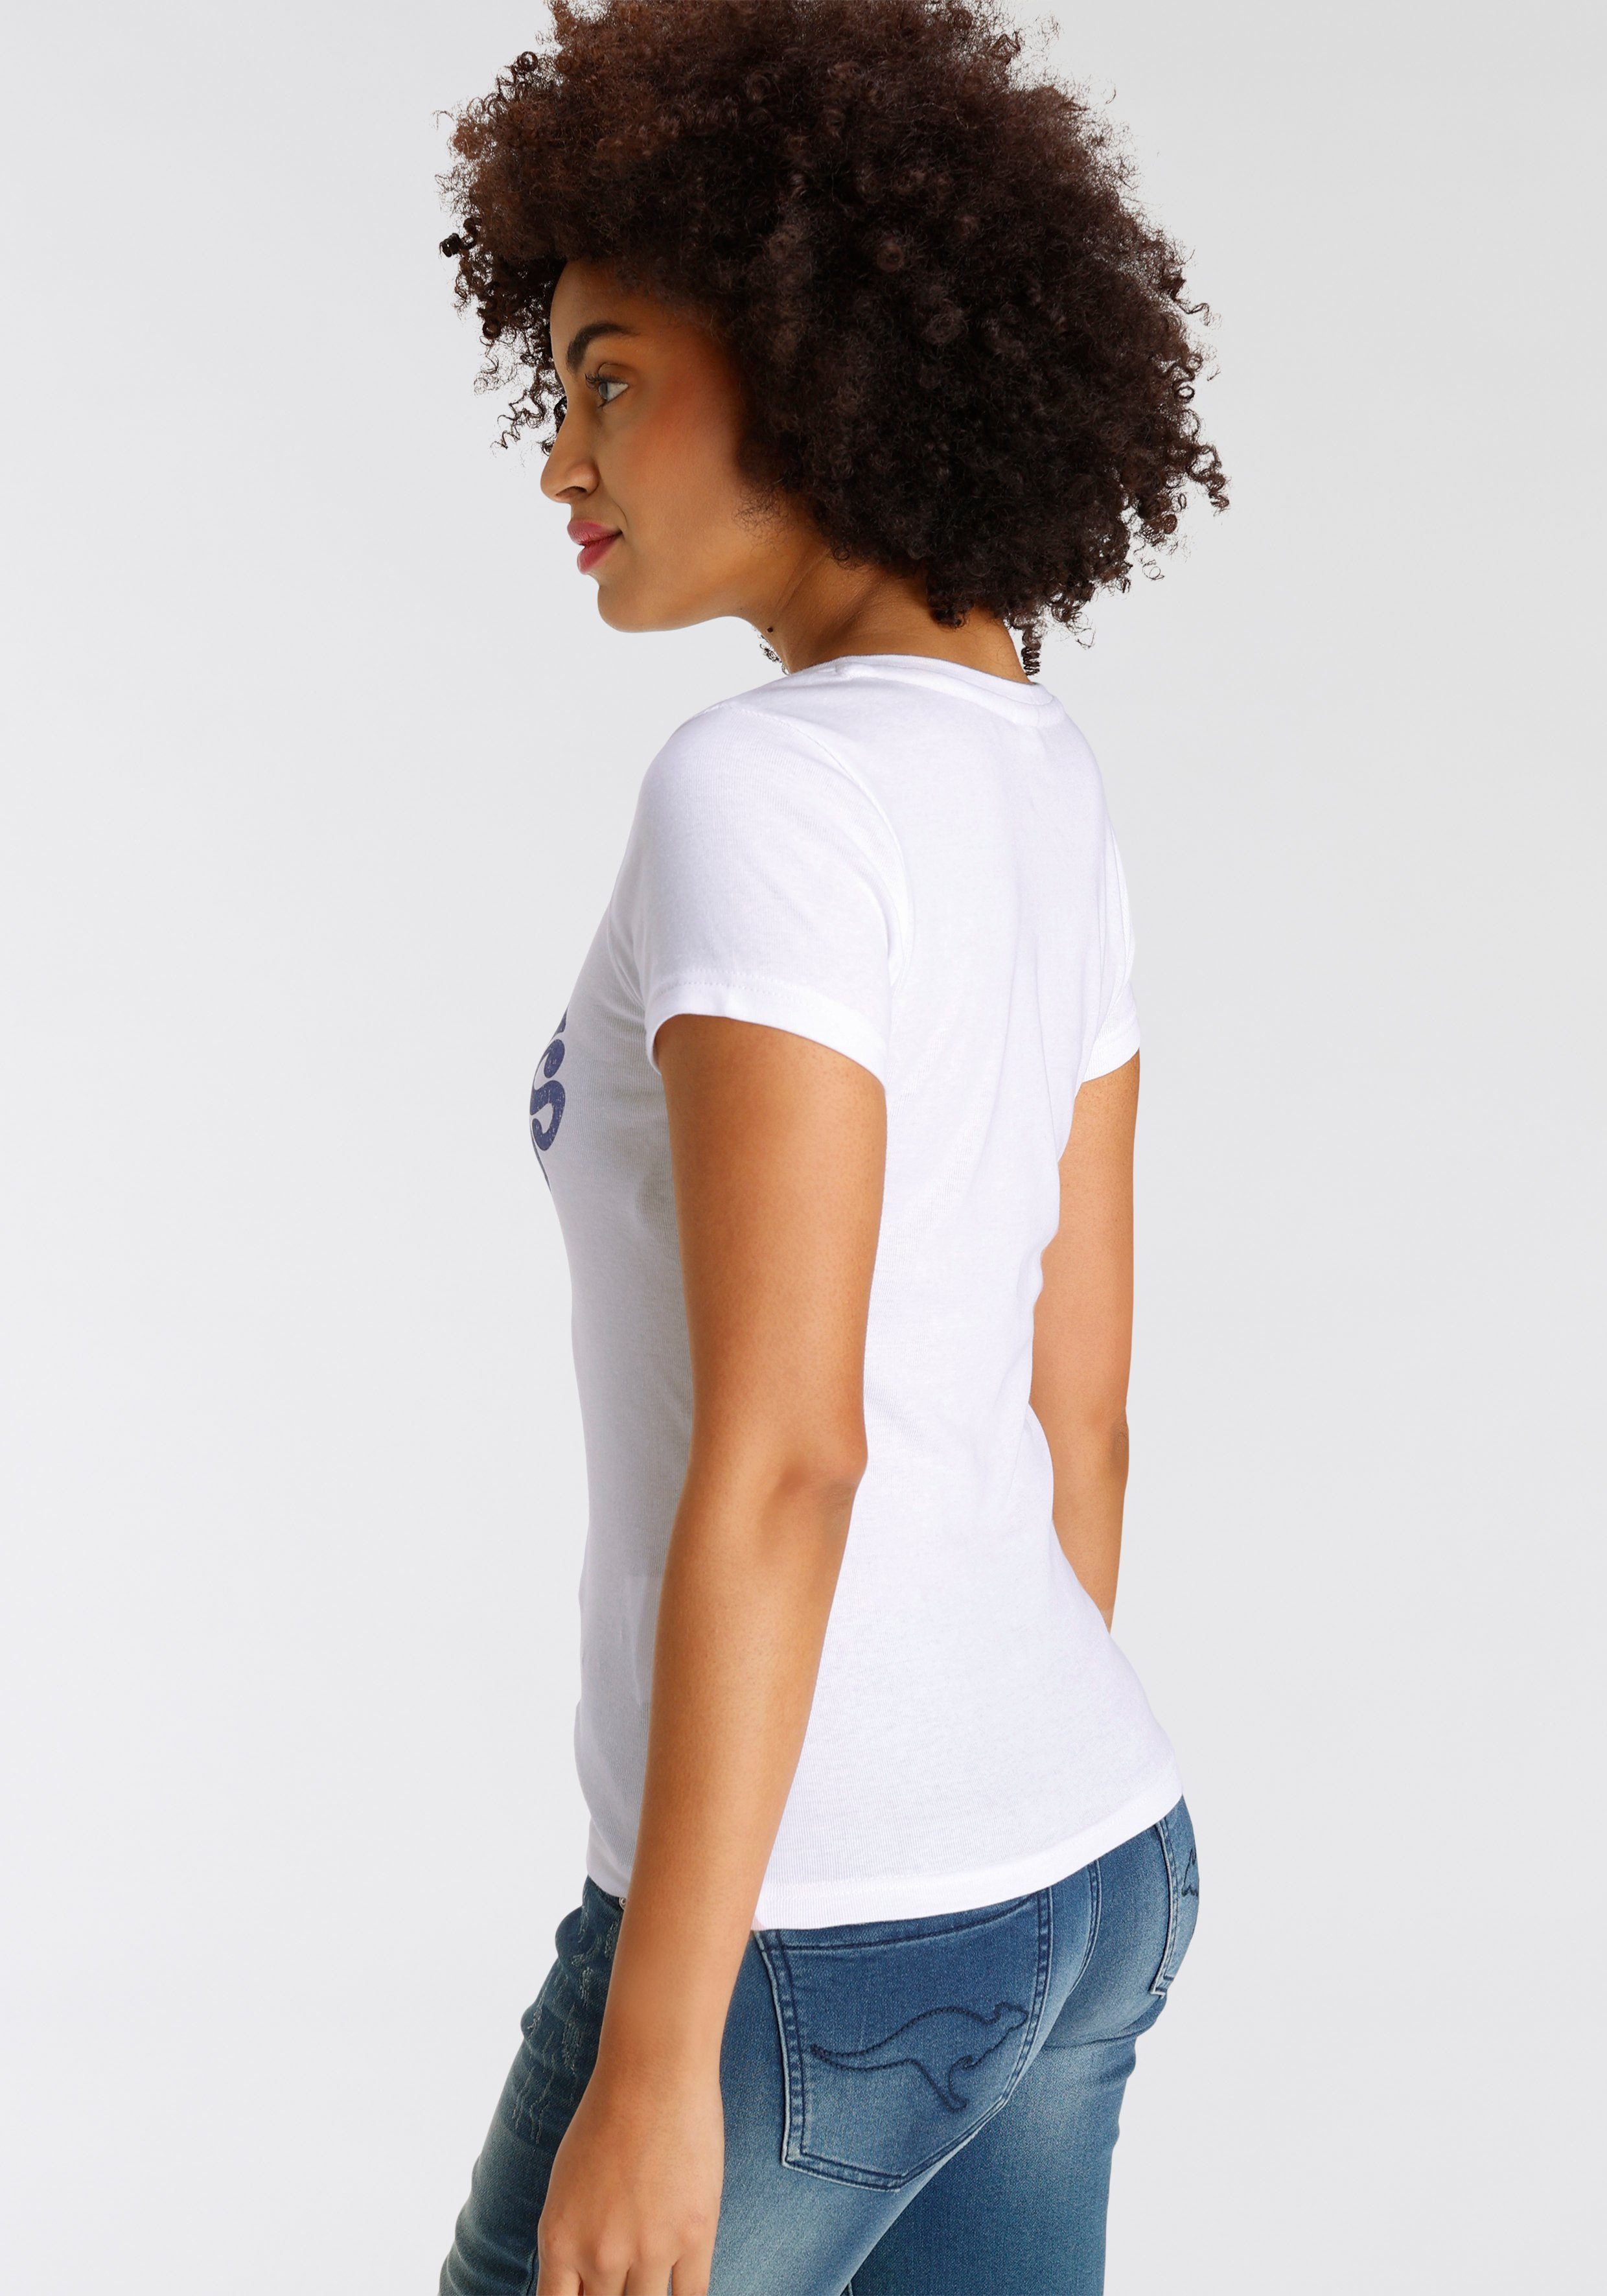 KangaROOS Print-Shirt mit herzlichem Retro-Logoprint NEUE weiß-blau - KOLLEKTION